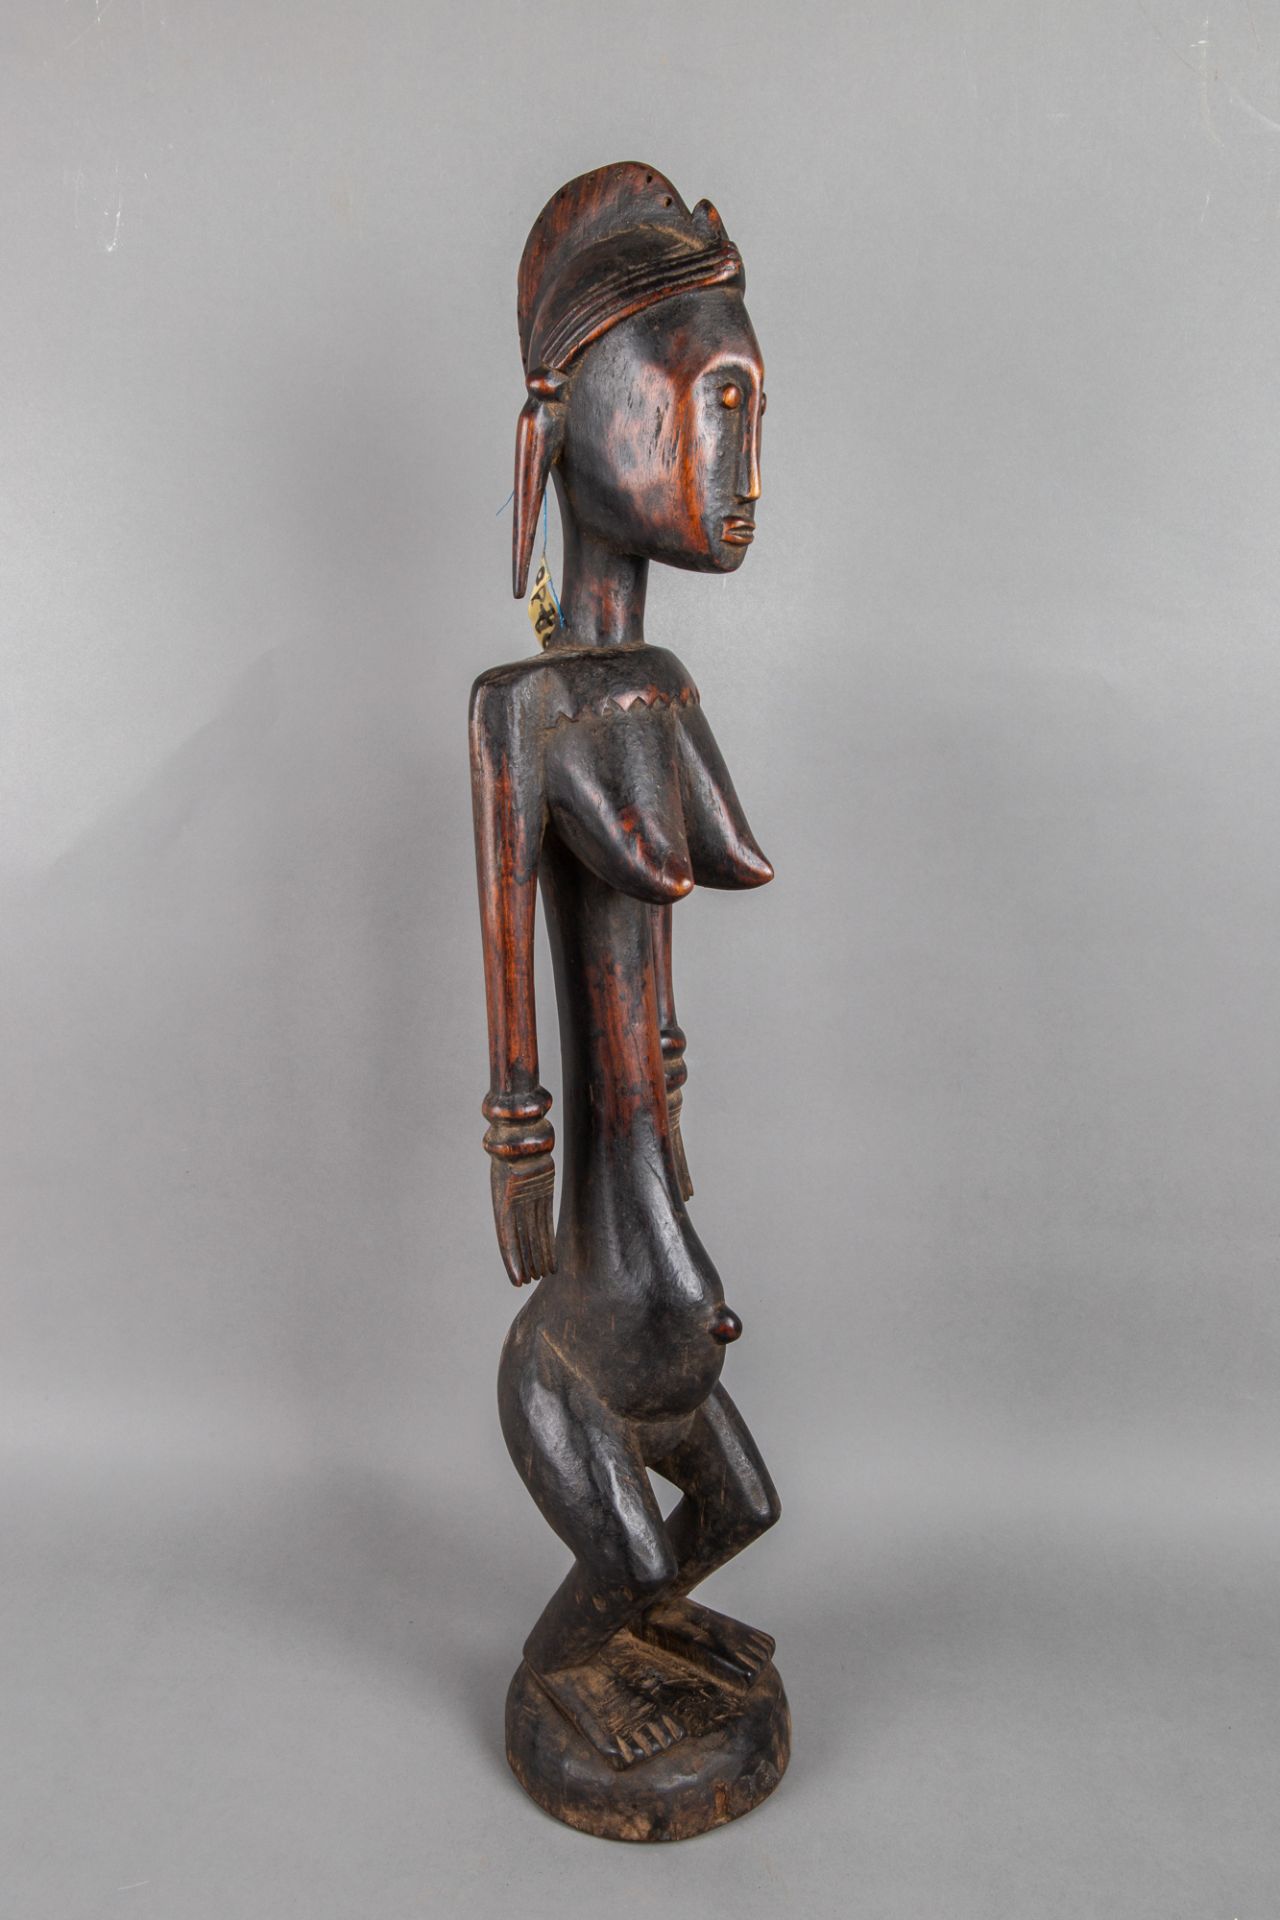 Stehende weibliche Figur 'jo nyeleni', Holz, Bamana, Mali - Bild 2 aus 4